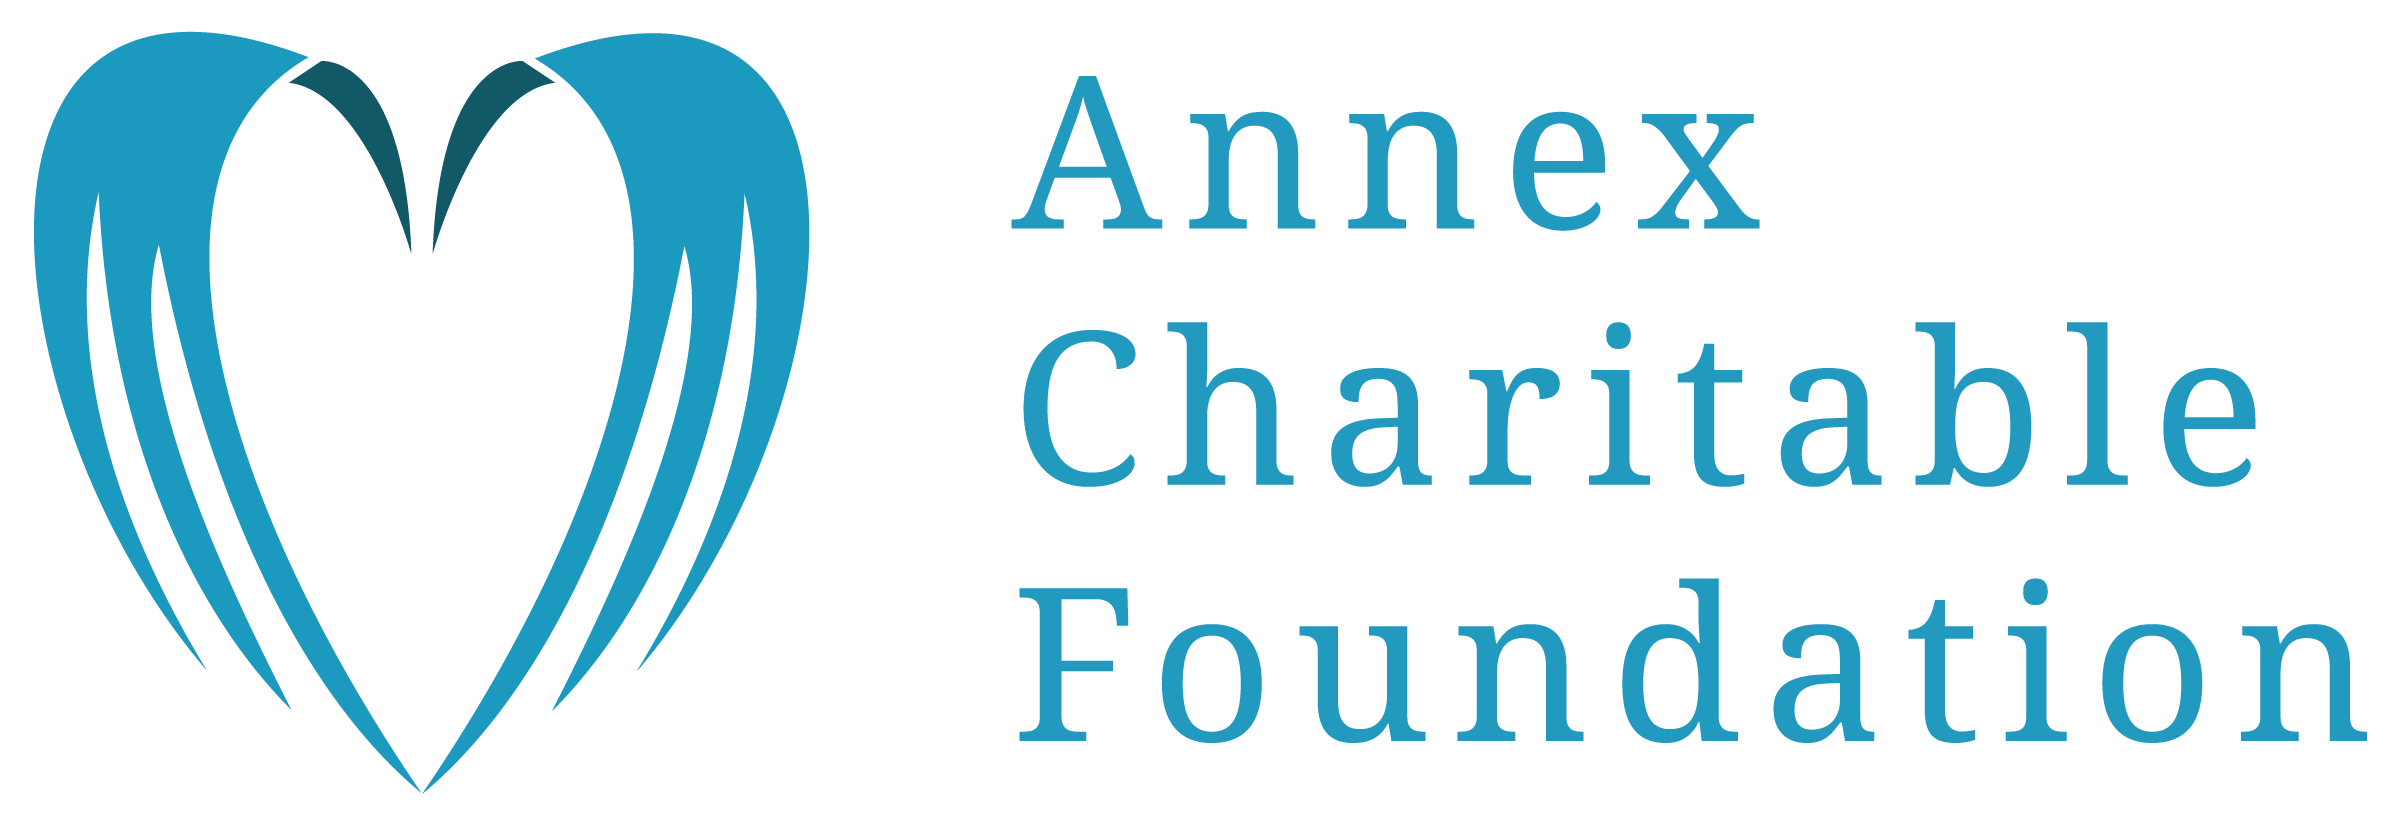 Annex Charitable Foundation